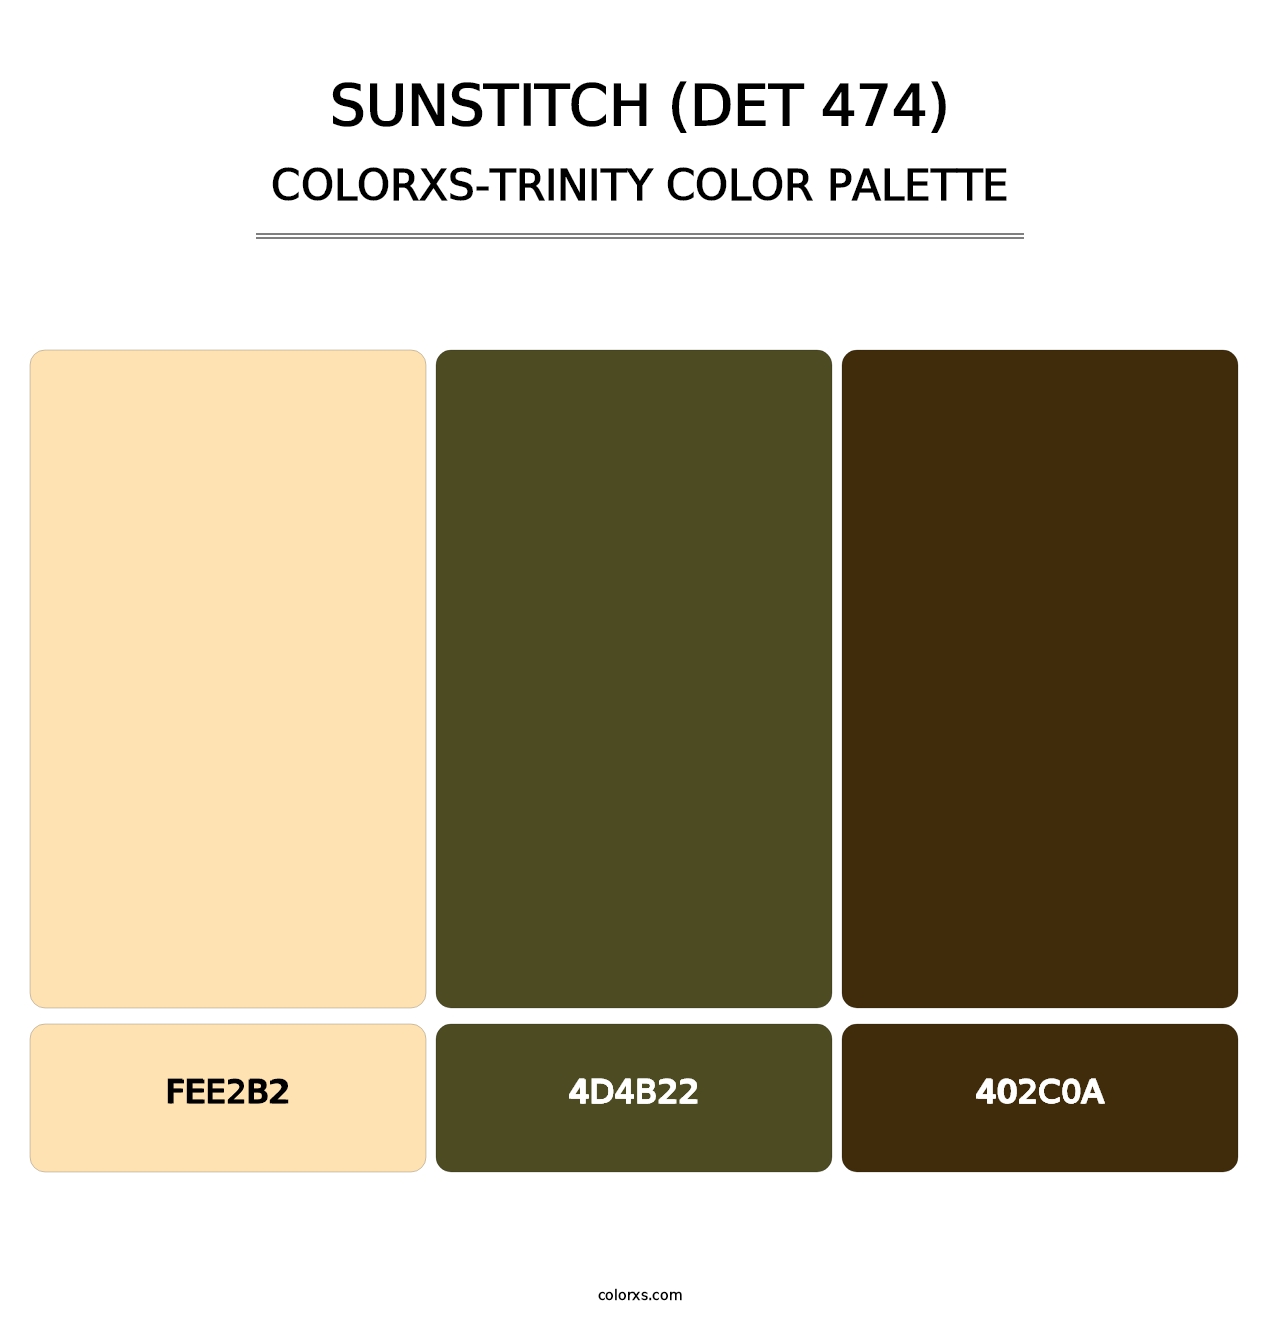 Sunstitch (DET 474) - Colorxs Trinity Palette